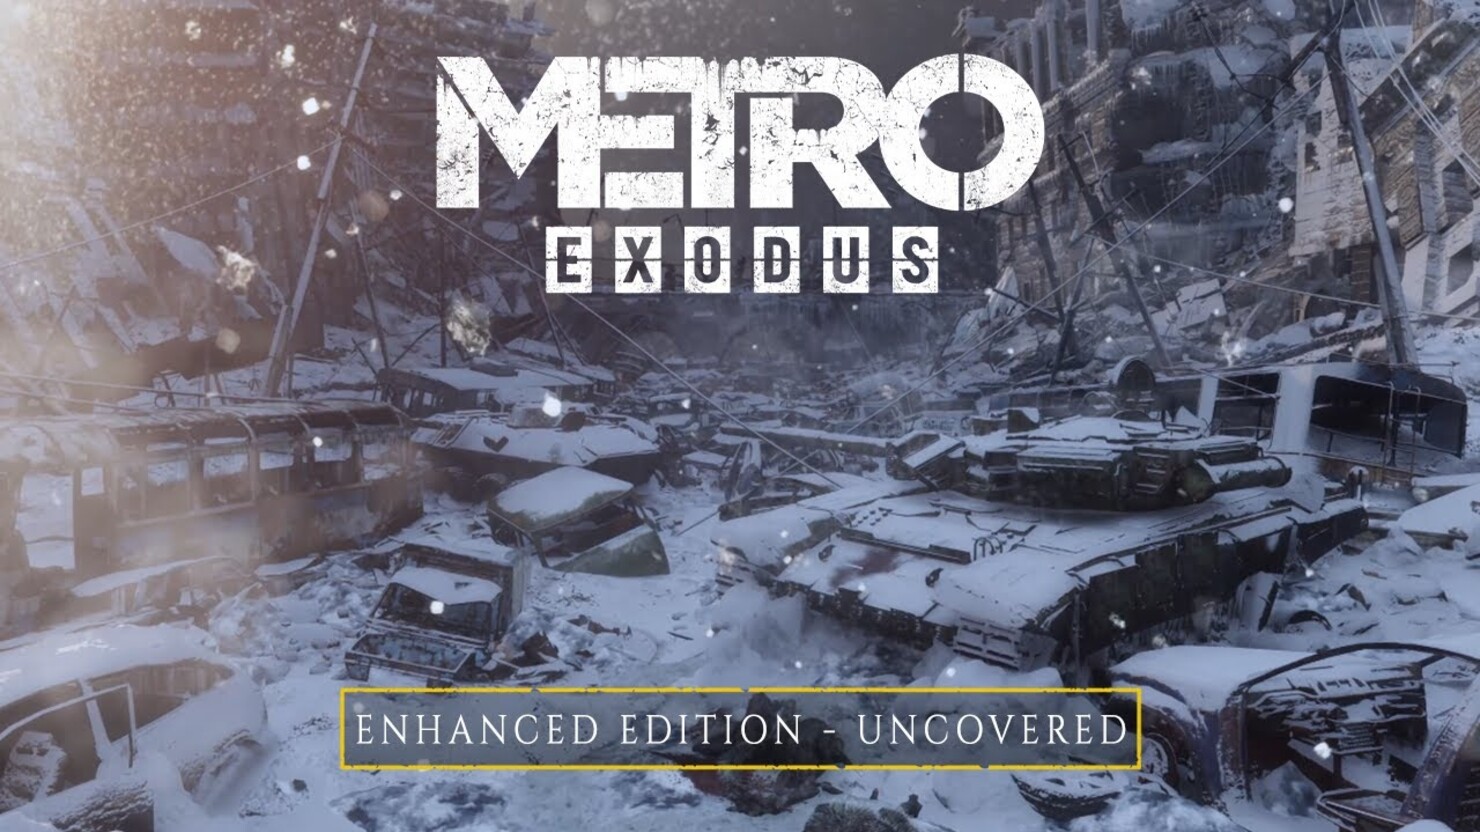 Метро эксодус enhanced edition. Метро исход енхансед. Metro Exodus: enhanced Edition. Метро Exodus enhanced Edition. Metro Exodus PC enhanced Edition.